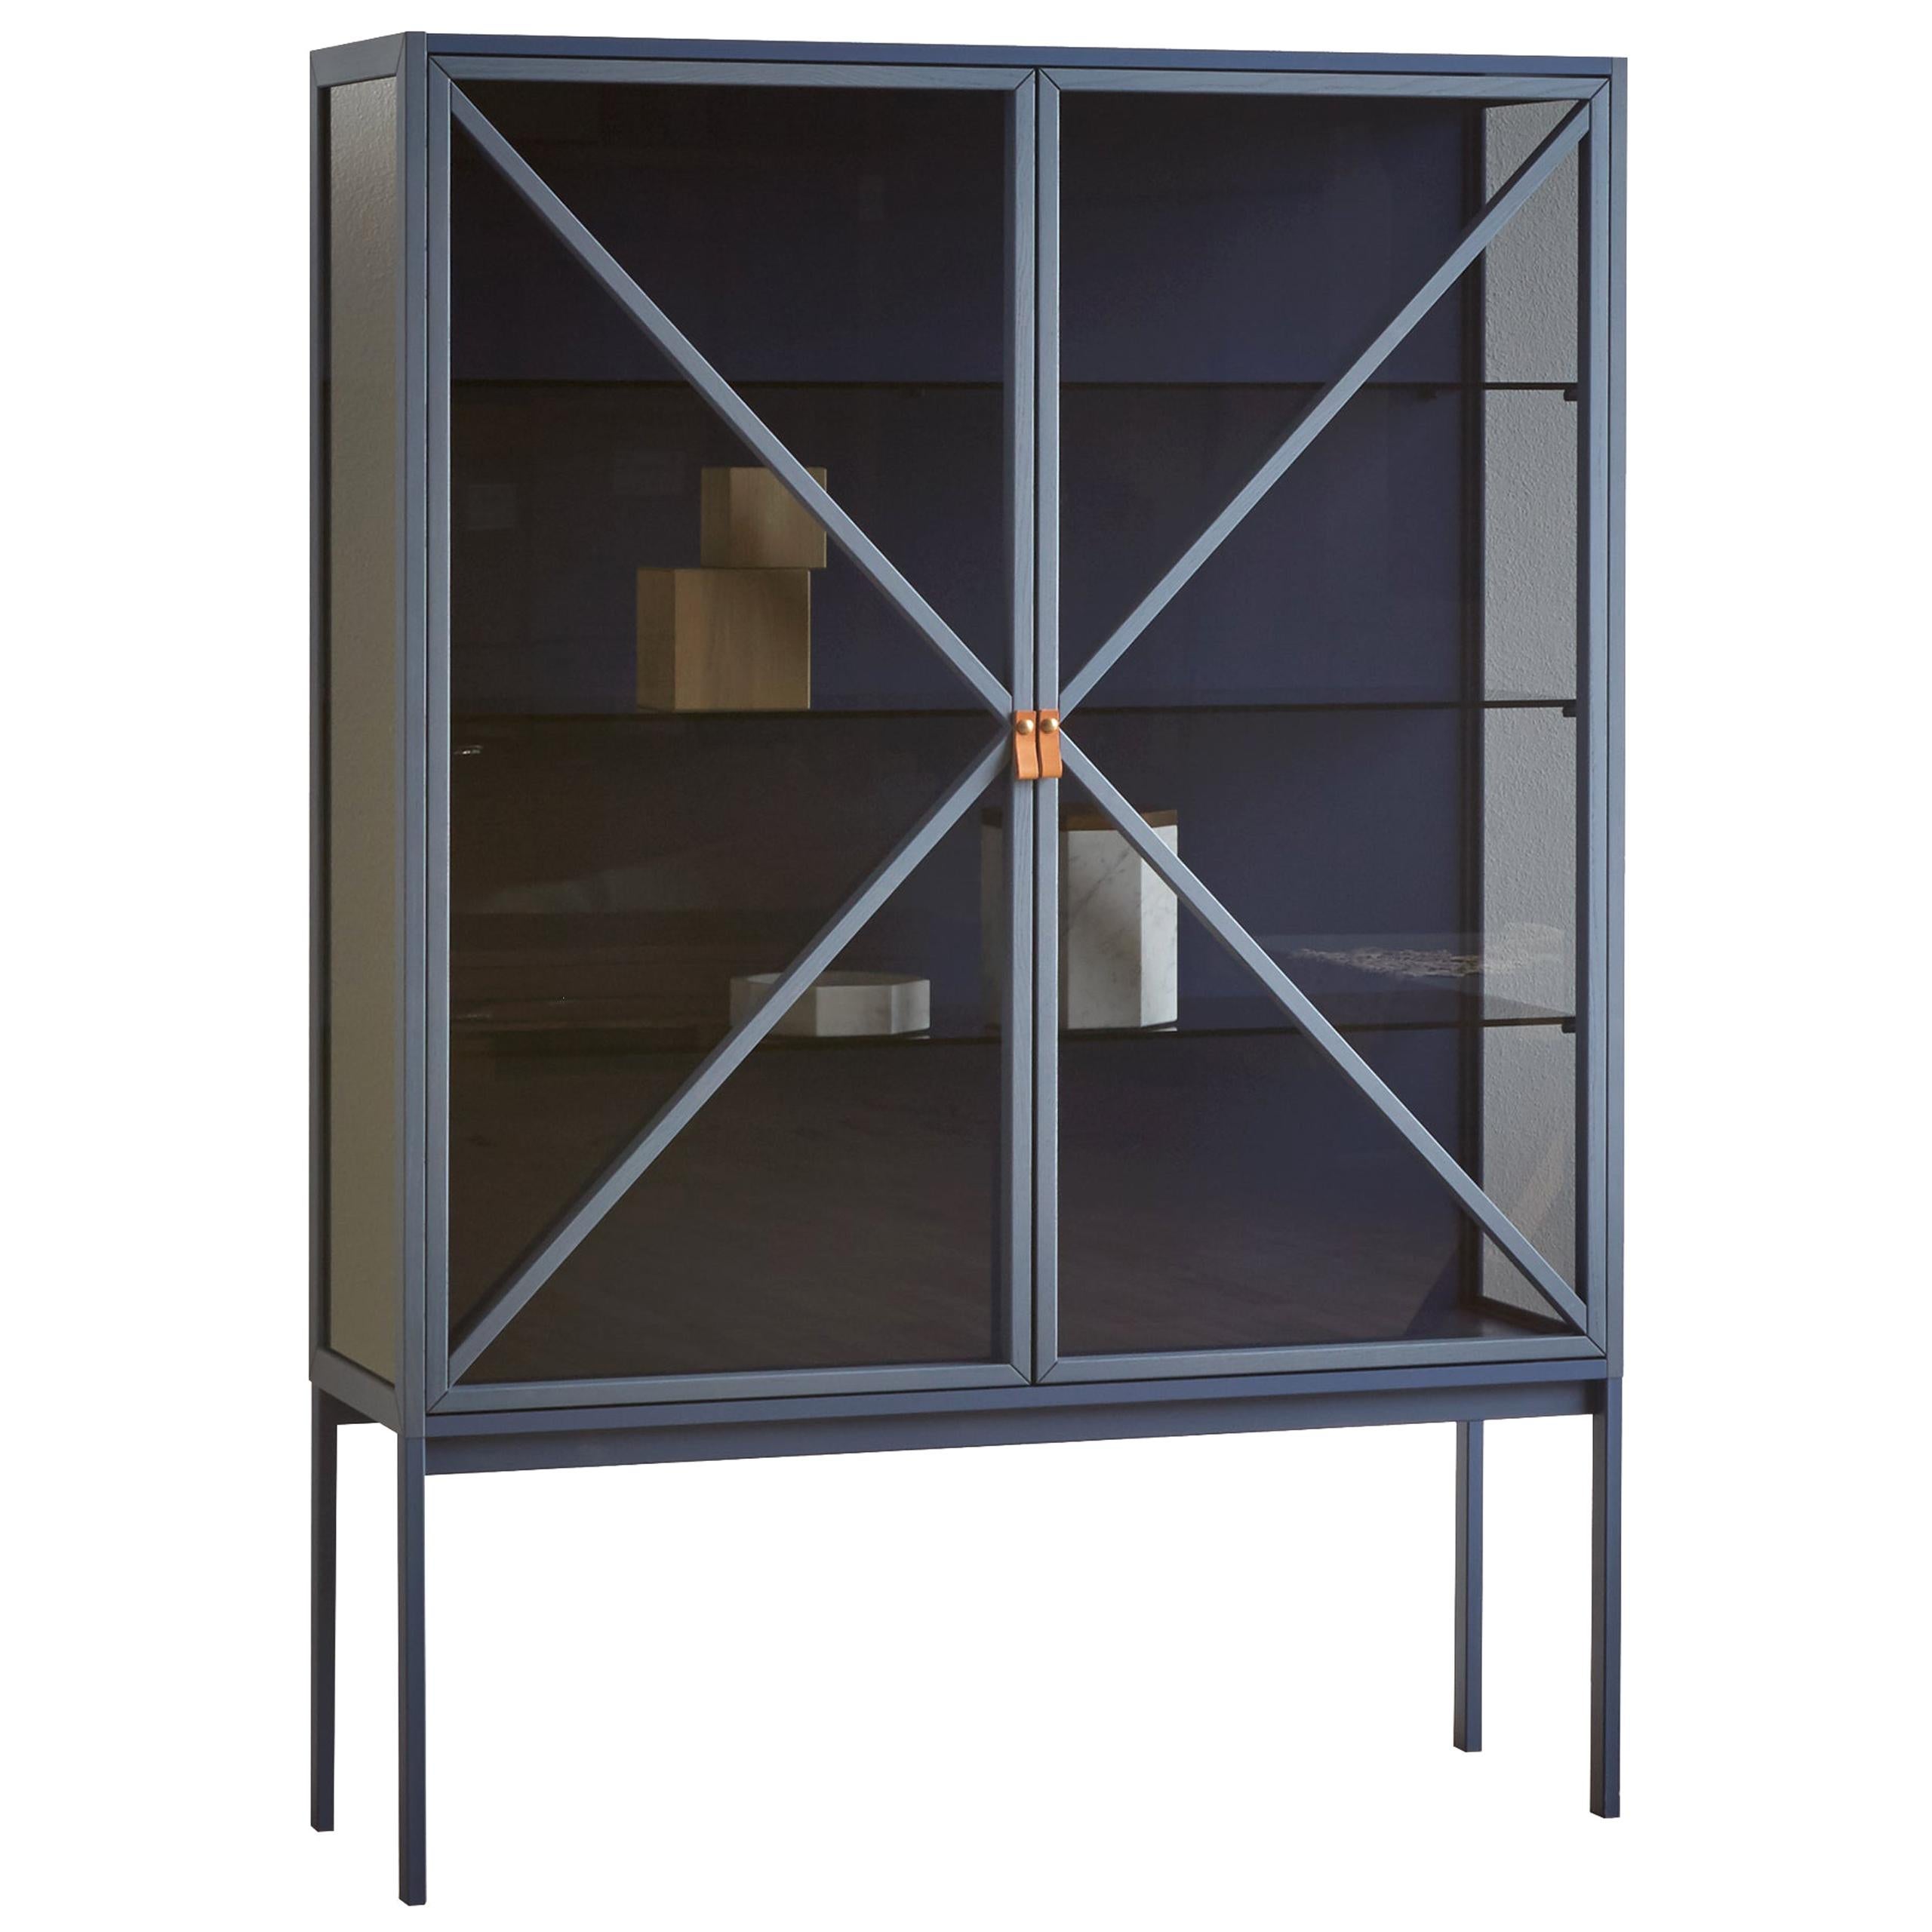 Kramer grand meuble vertical avec cadre laqué bleu intense de E-GGS